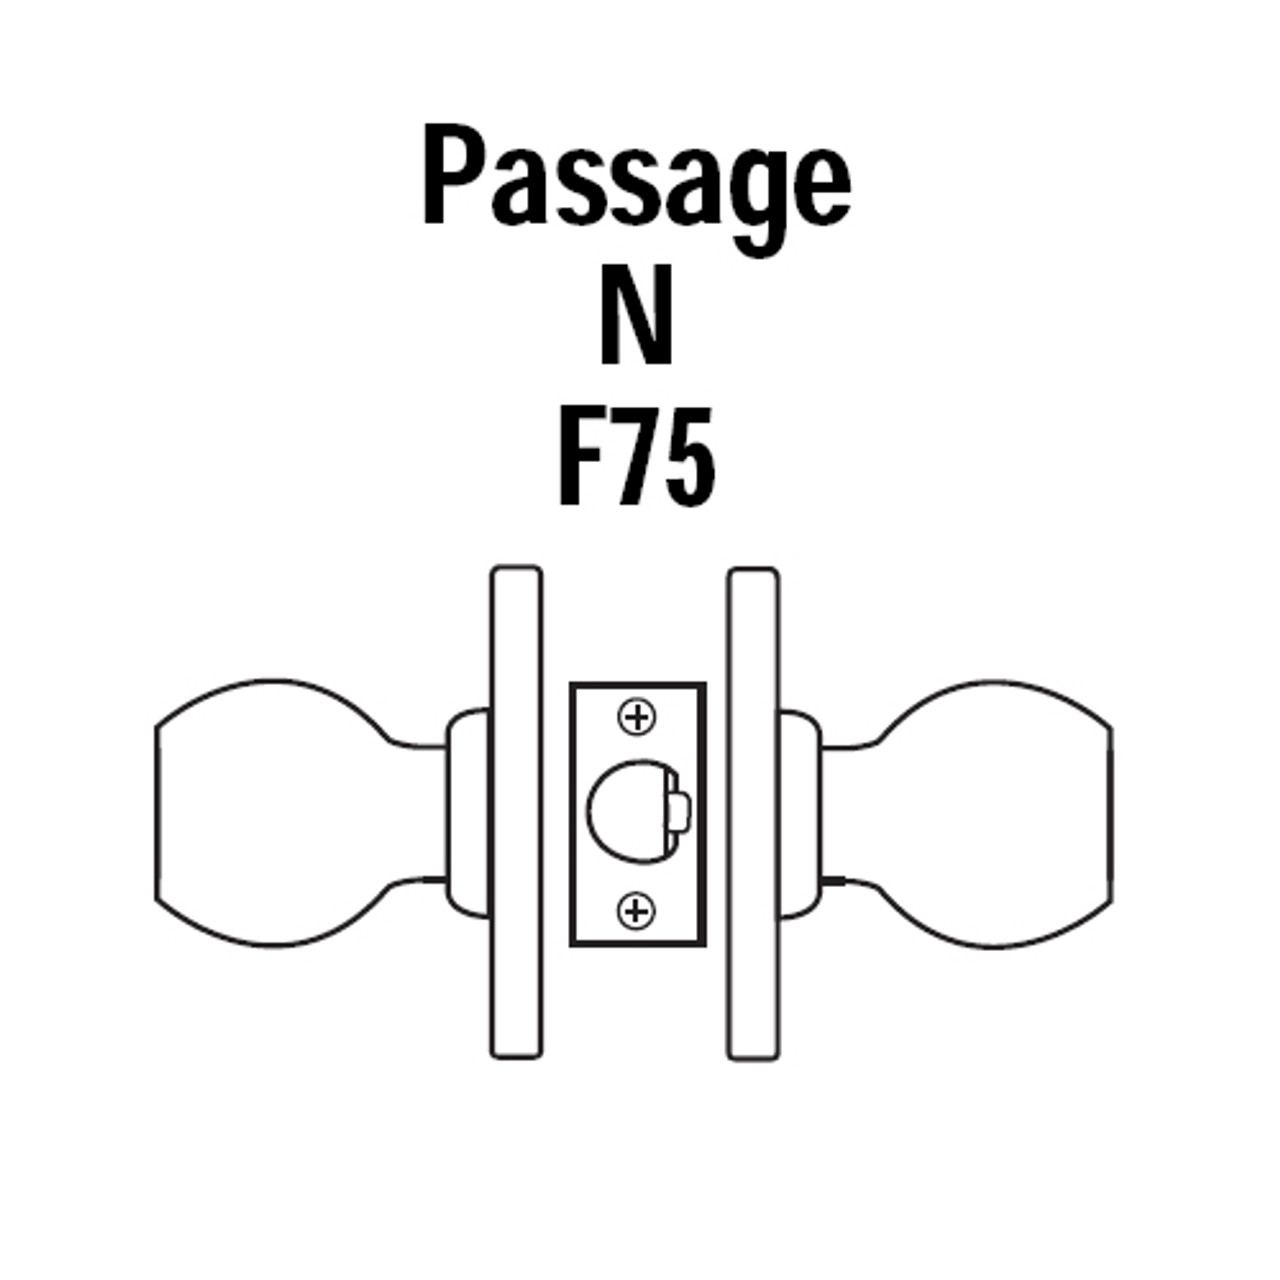 8K30N4DS3611 Best 8K Series Passage Heavy Duty Cylindrical Knob Locks with Round Style in Bright Bronze